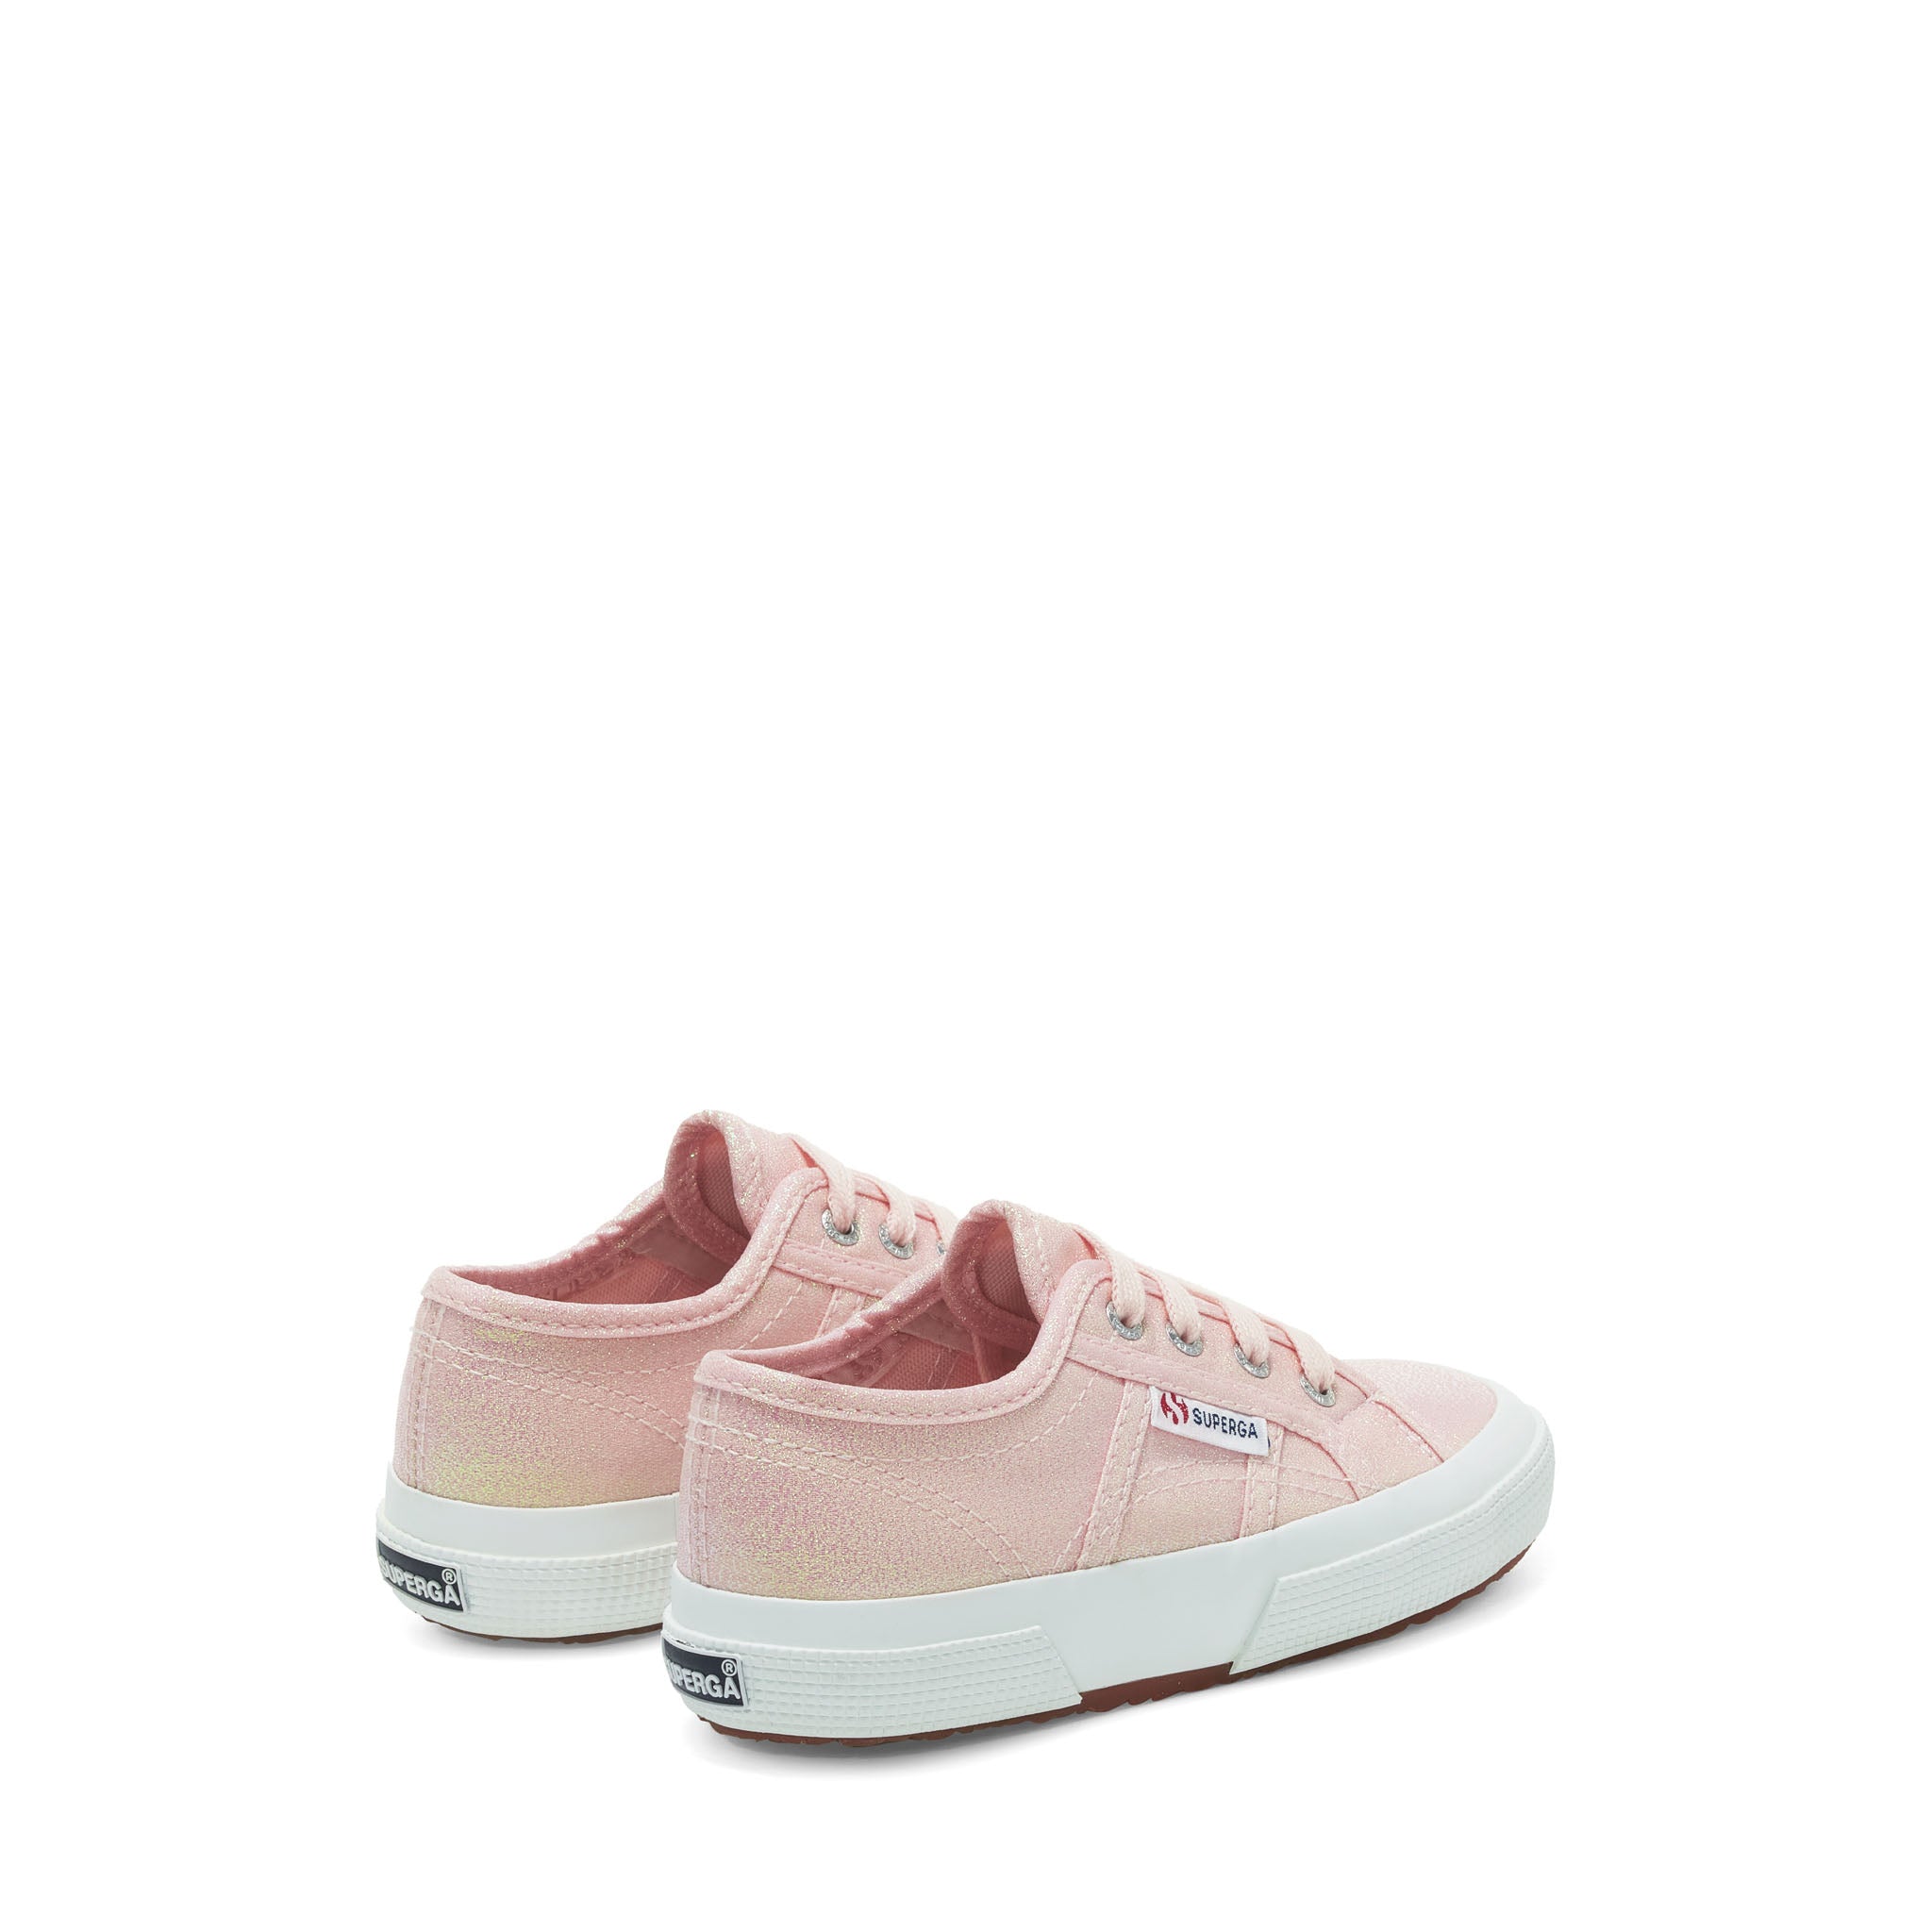 Superga 2750 Kids Lam√© Sneakers - Iridescent Pink. Back view.